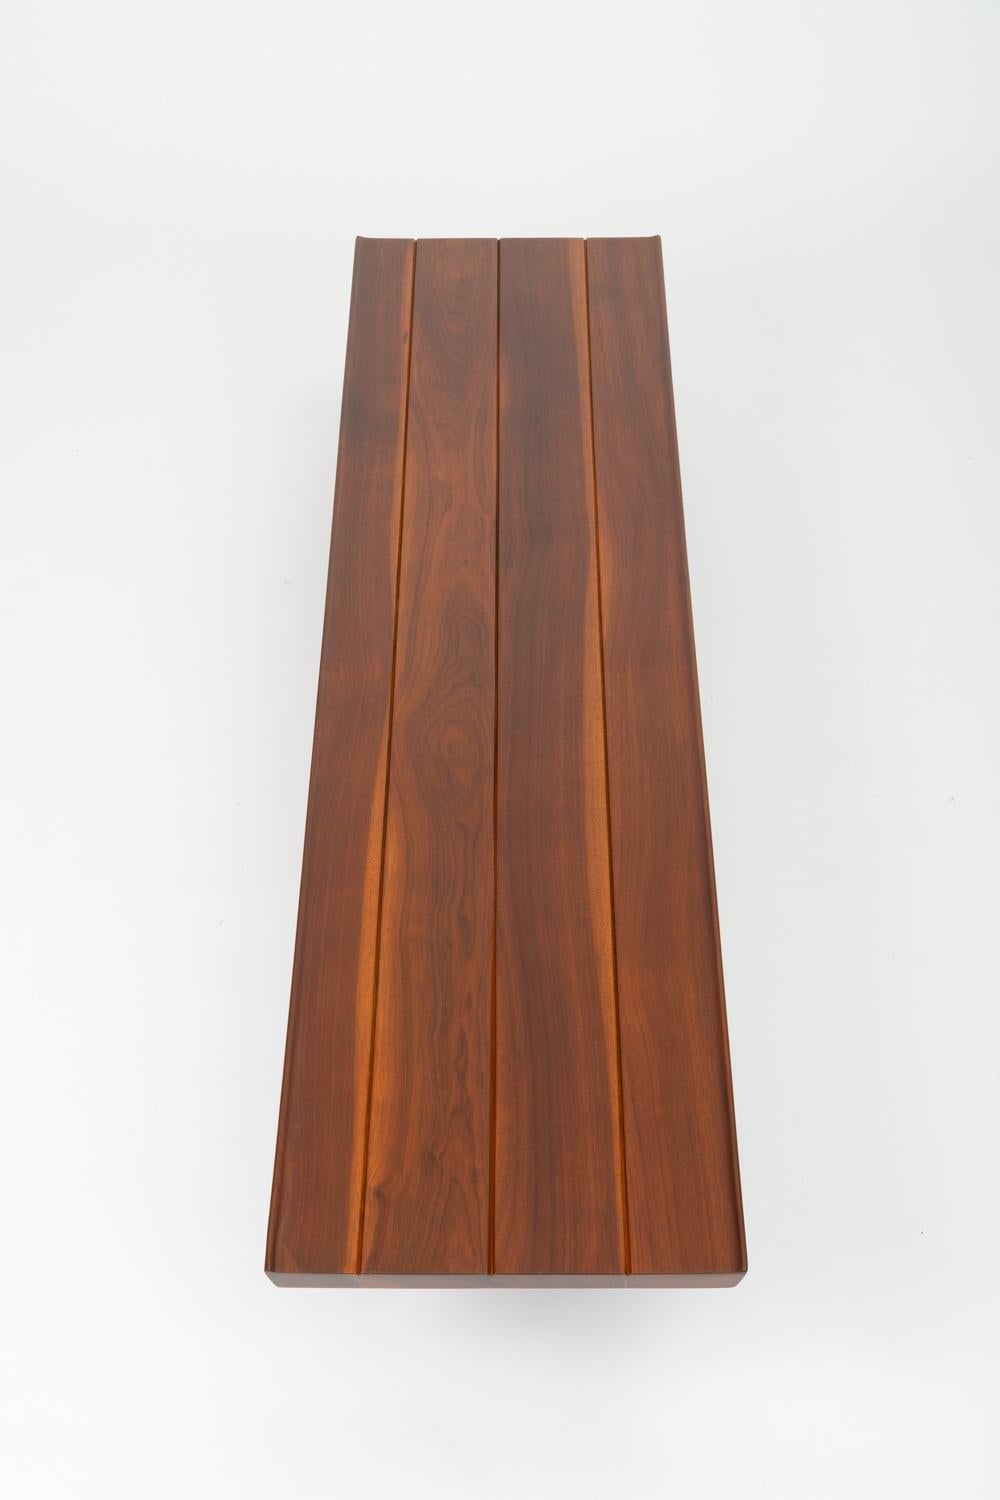 Walnut “Long John” Bench or Coffee Table by Edward Wormley for Dunbar 2